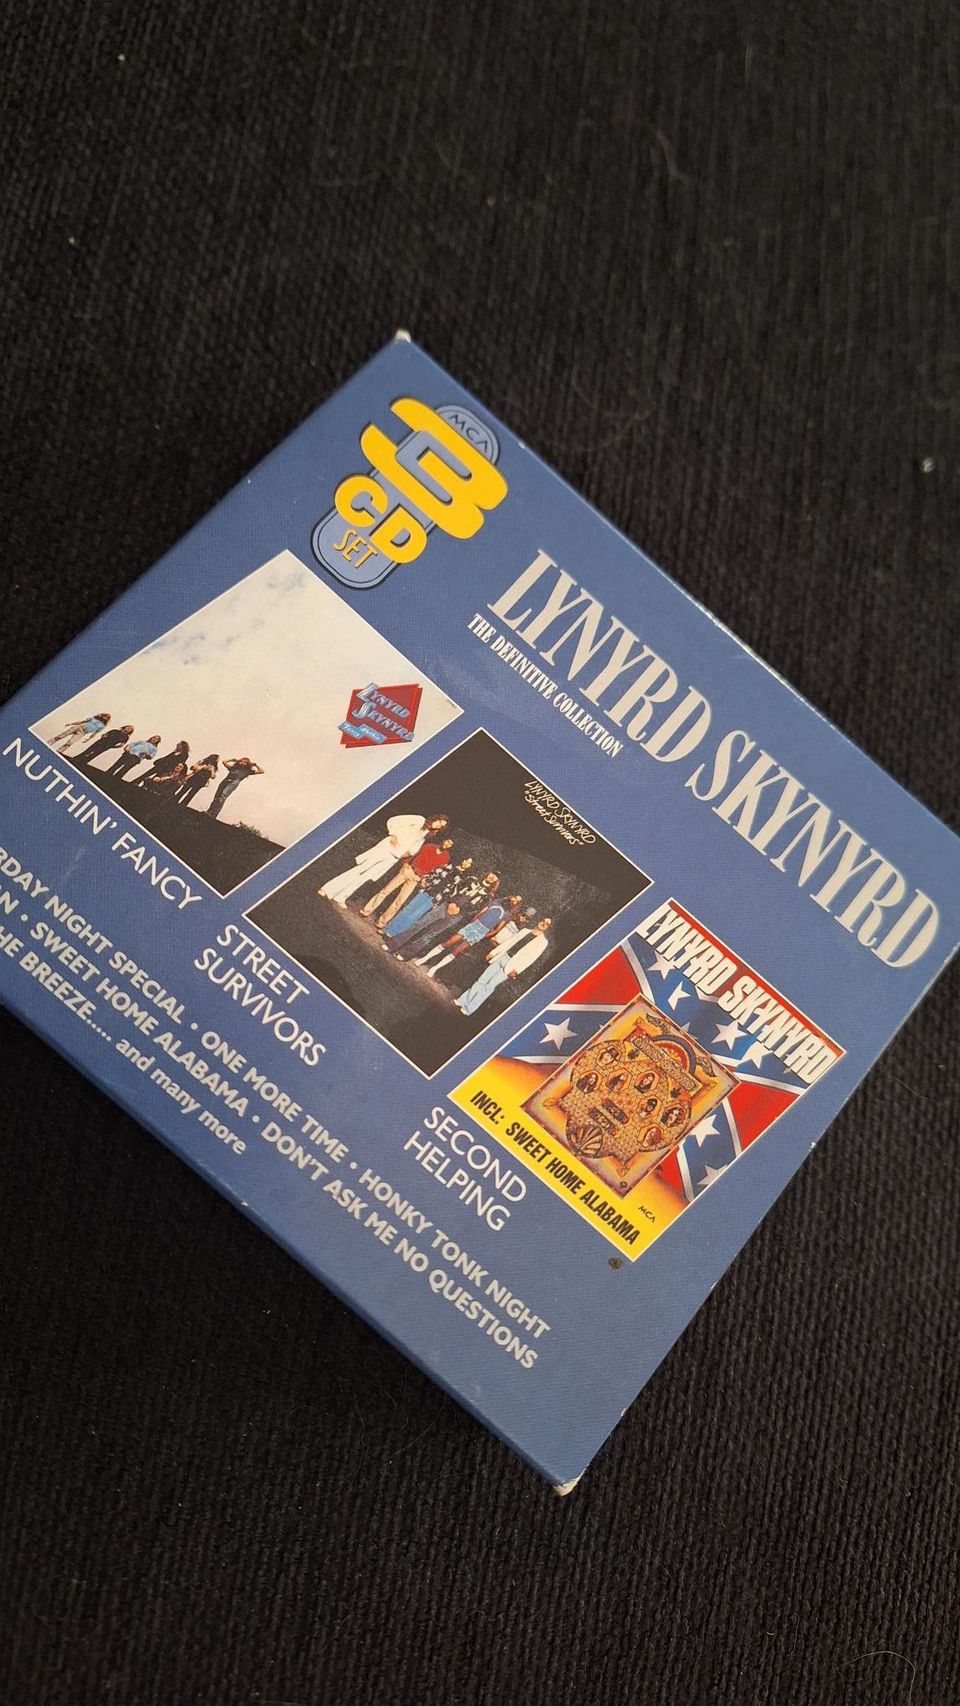 Lynyrd Skynyrd: the definitive collection 3cd